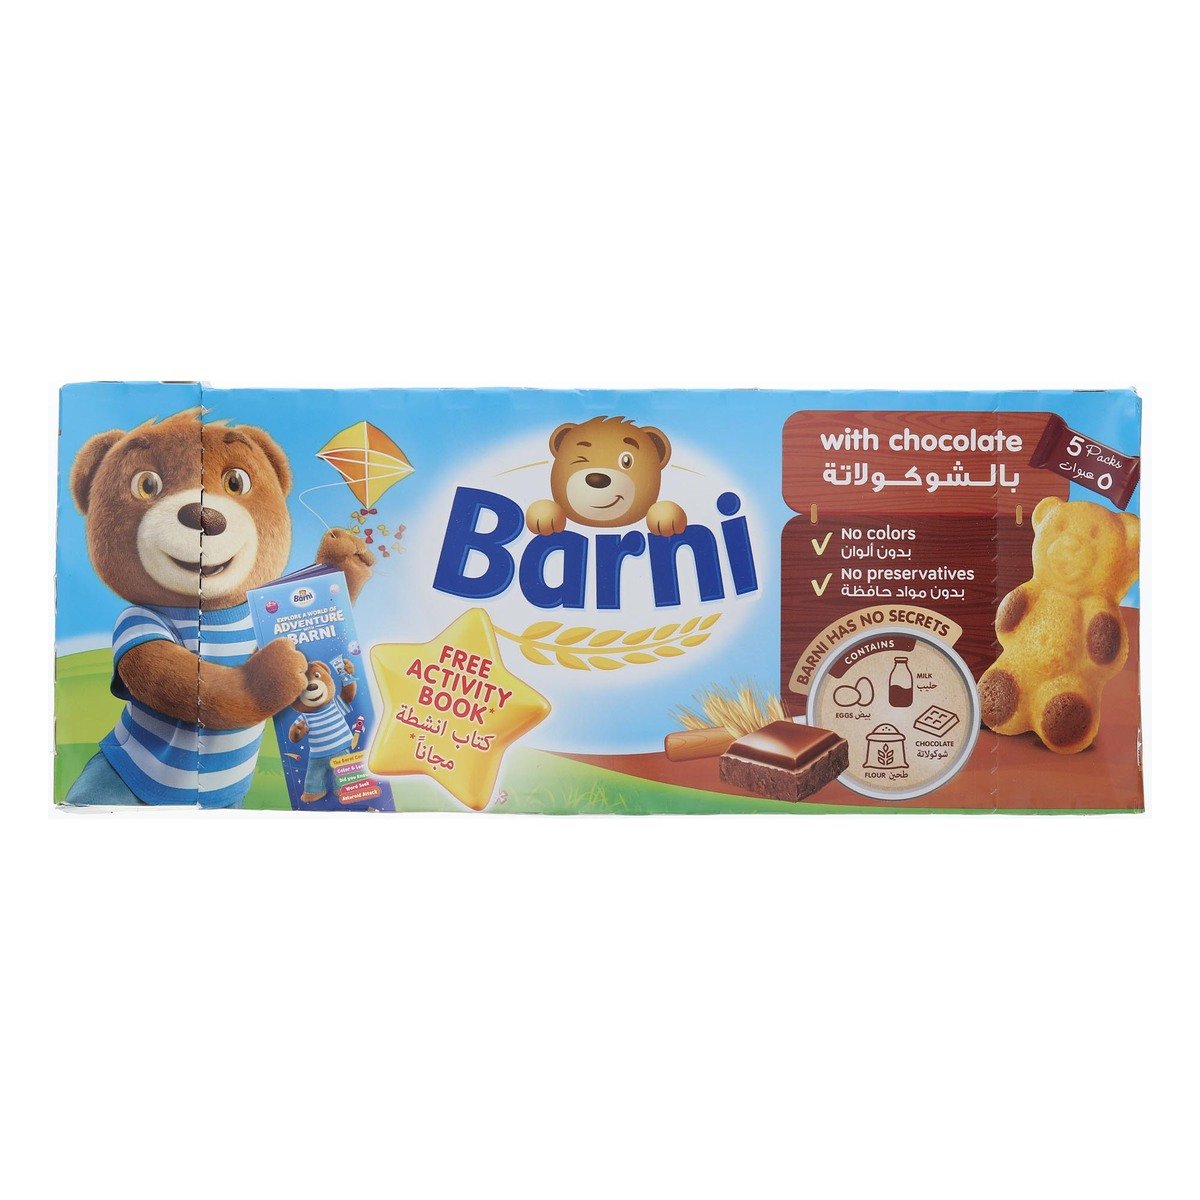 Barni With Chocolate 5 pcs + Offer